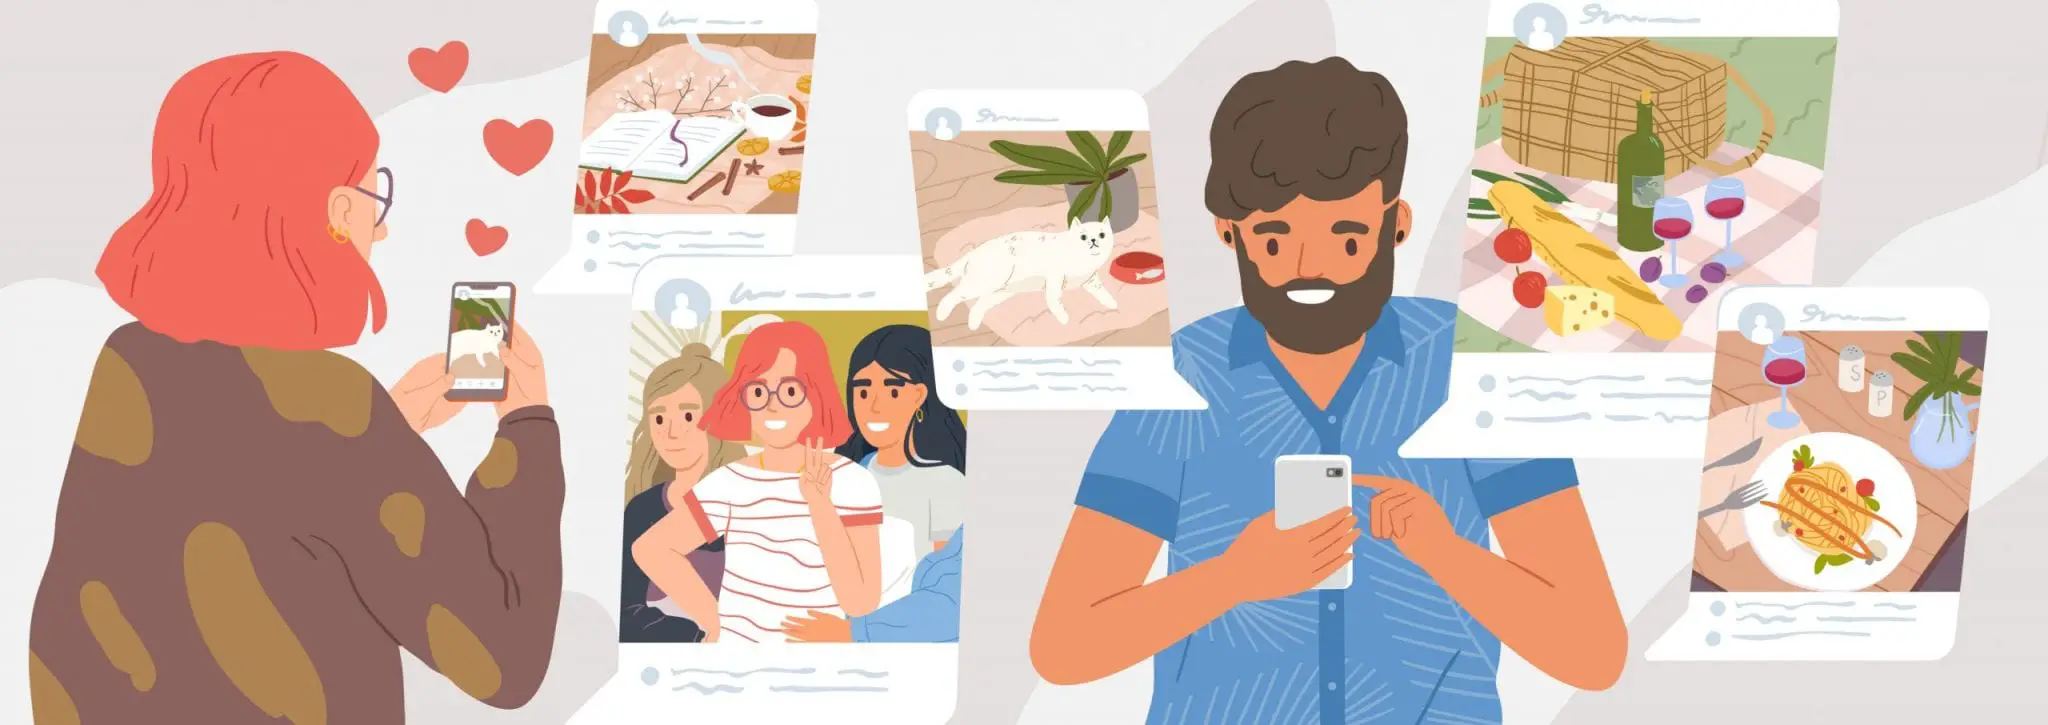 Man and Woman Scrolling Through Social Media Illustration